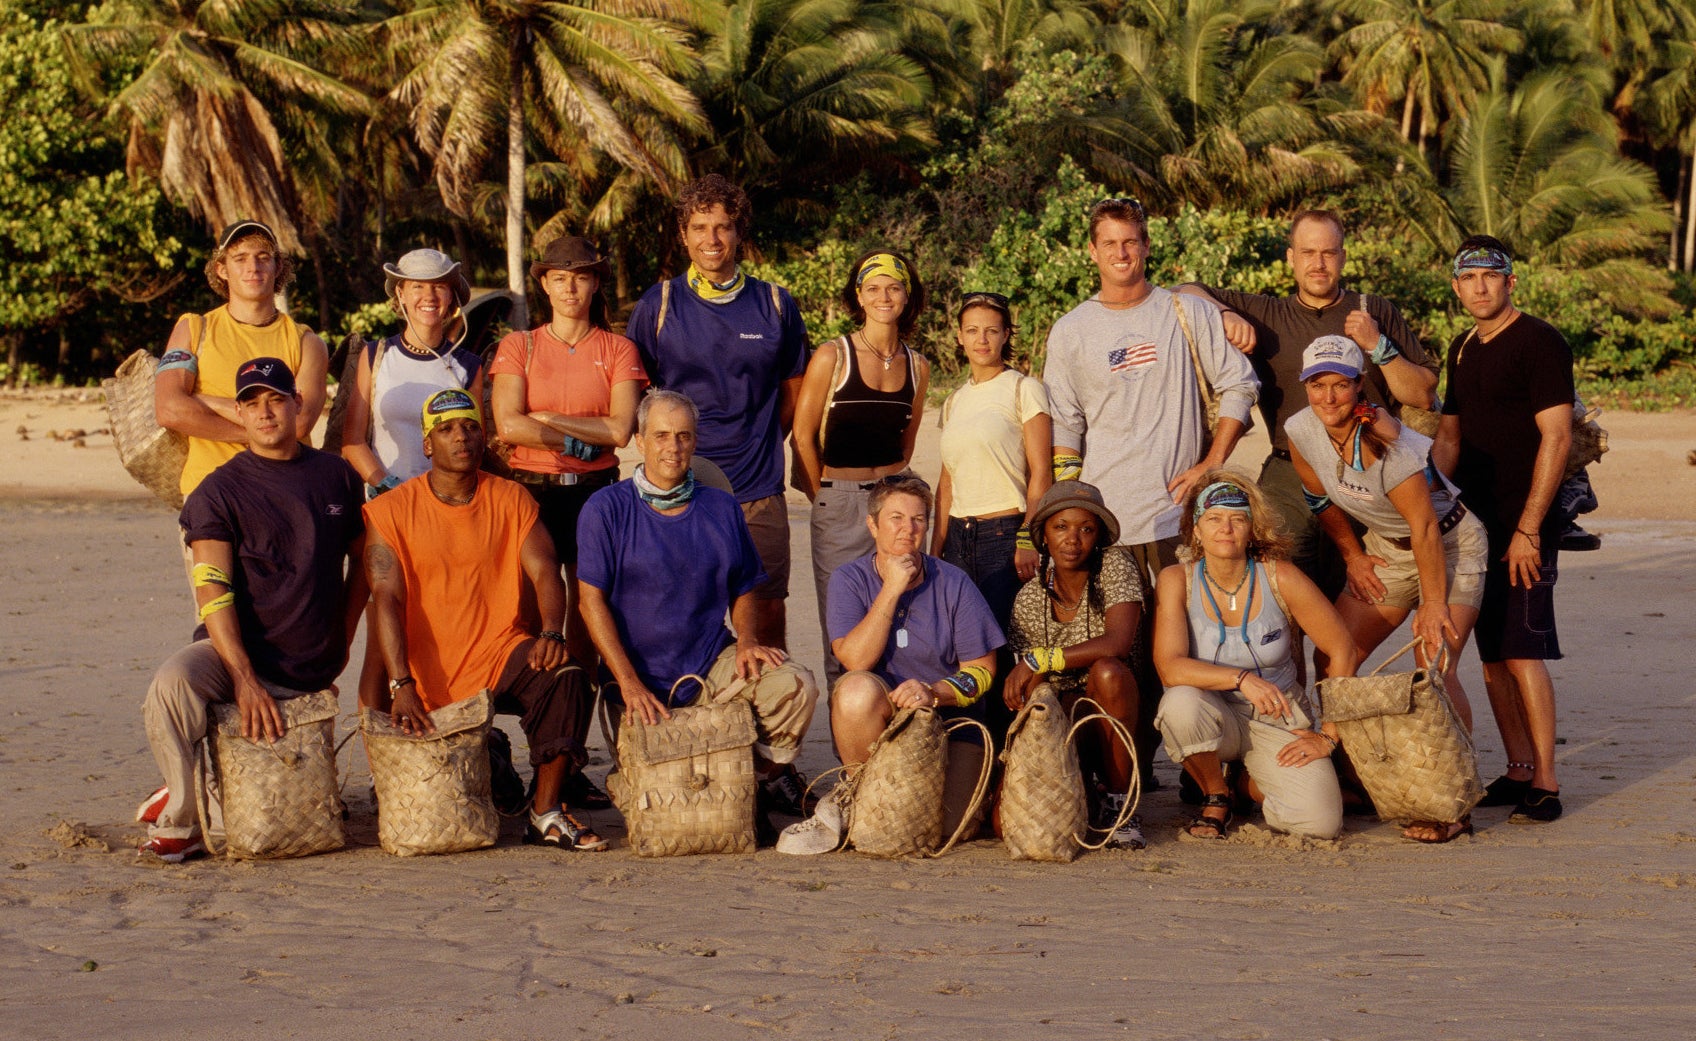 The cast of Survivor: Marquesas